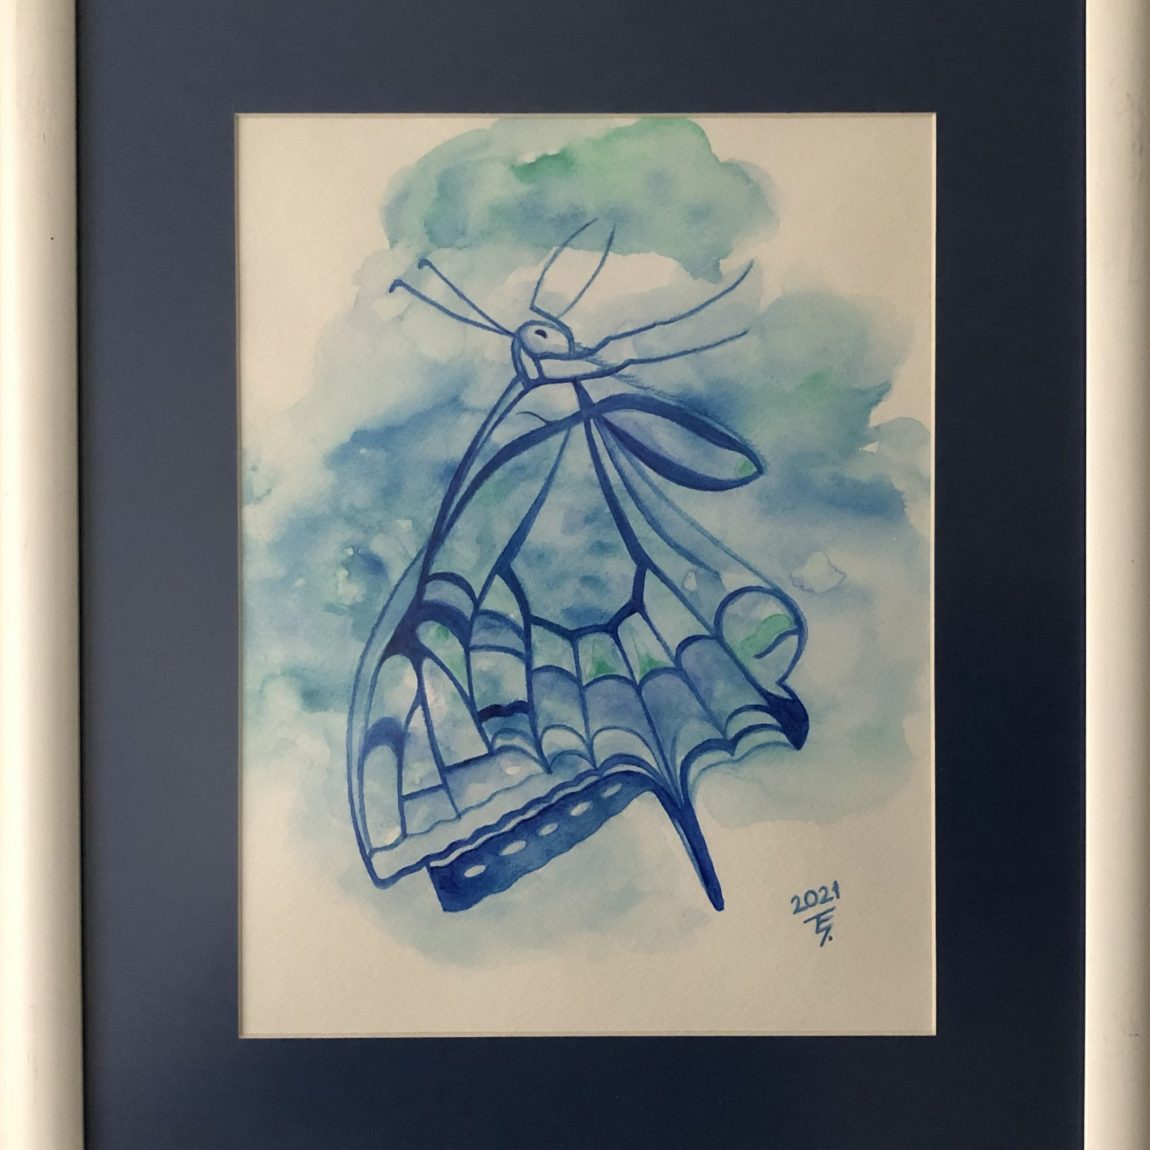 ŞULE AKTAŞ- "Blue Butterfly" Teknik: Suluboya Ölçü: 34,5 x 41,5 cm Fiyat : 250 TL